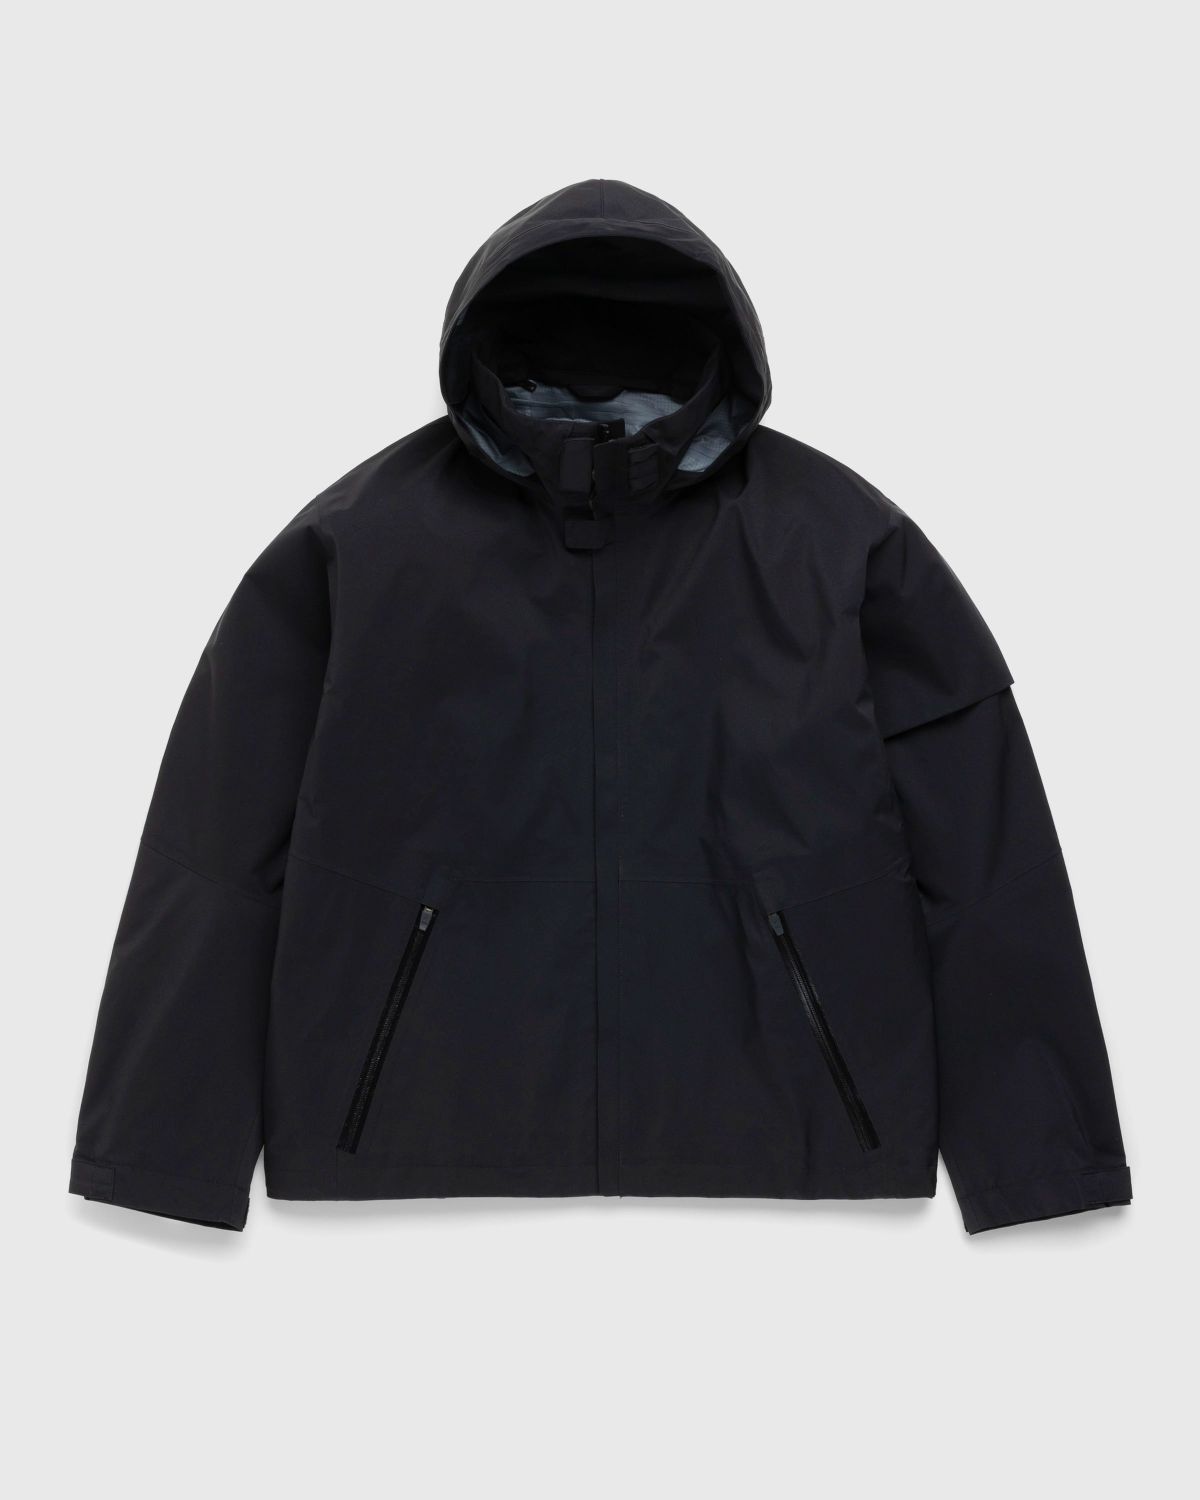 ACRONYM – J101-GT 3L Gore-Tex Pro Interops Jacket Black - Outerwear - Black - Image 1